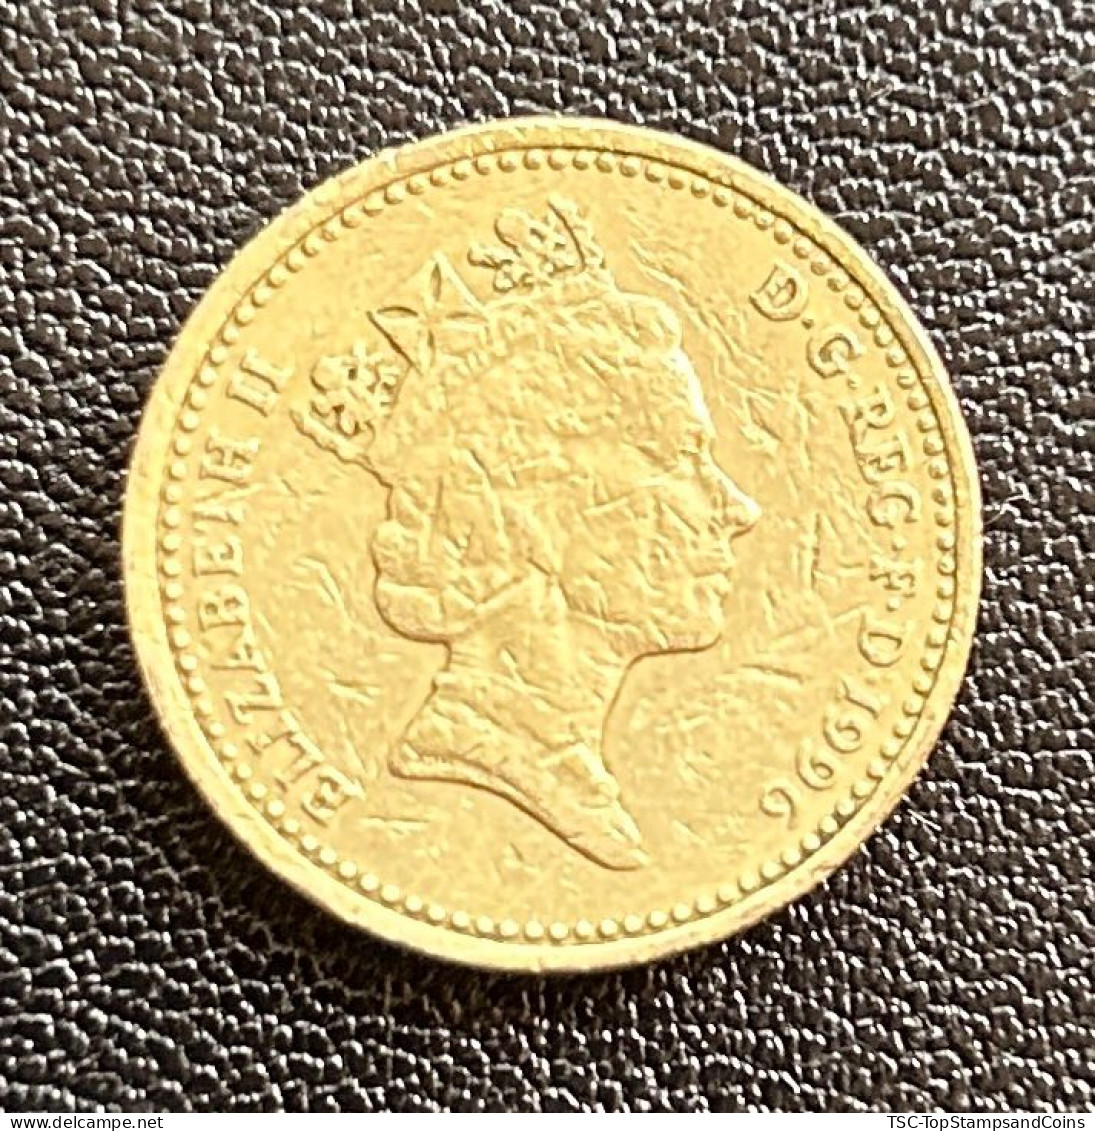 $$GB896 - Queen Elizabeth II - 1 Pound Coin - 3rd Portrait - Celtic Cross - Great-Britain - 1996 - 1 Pound